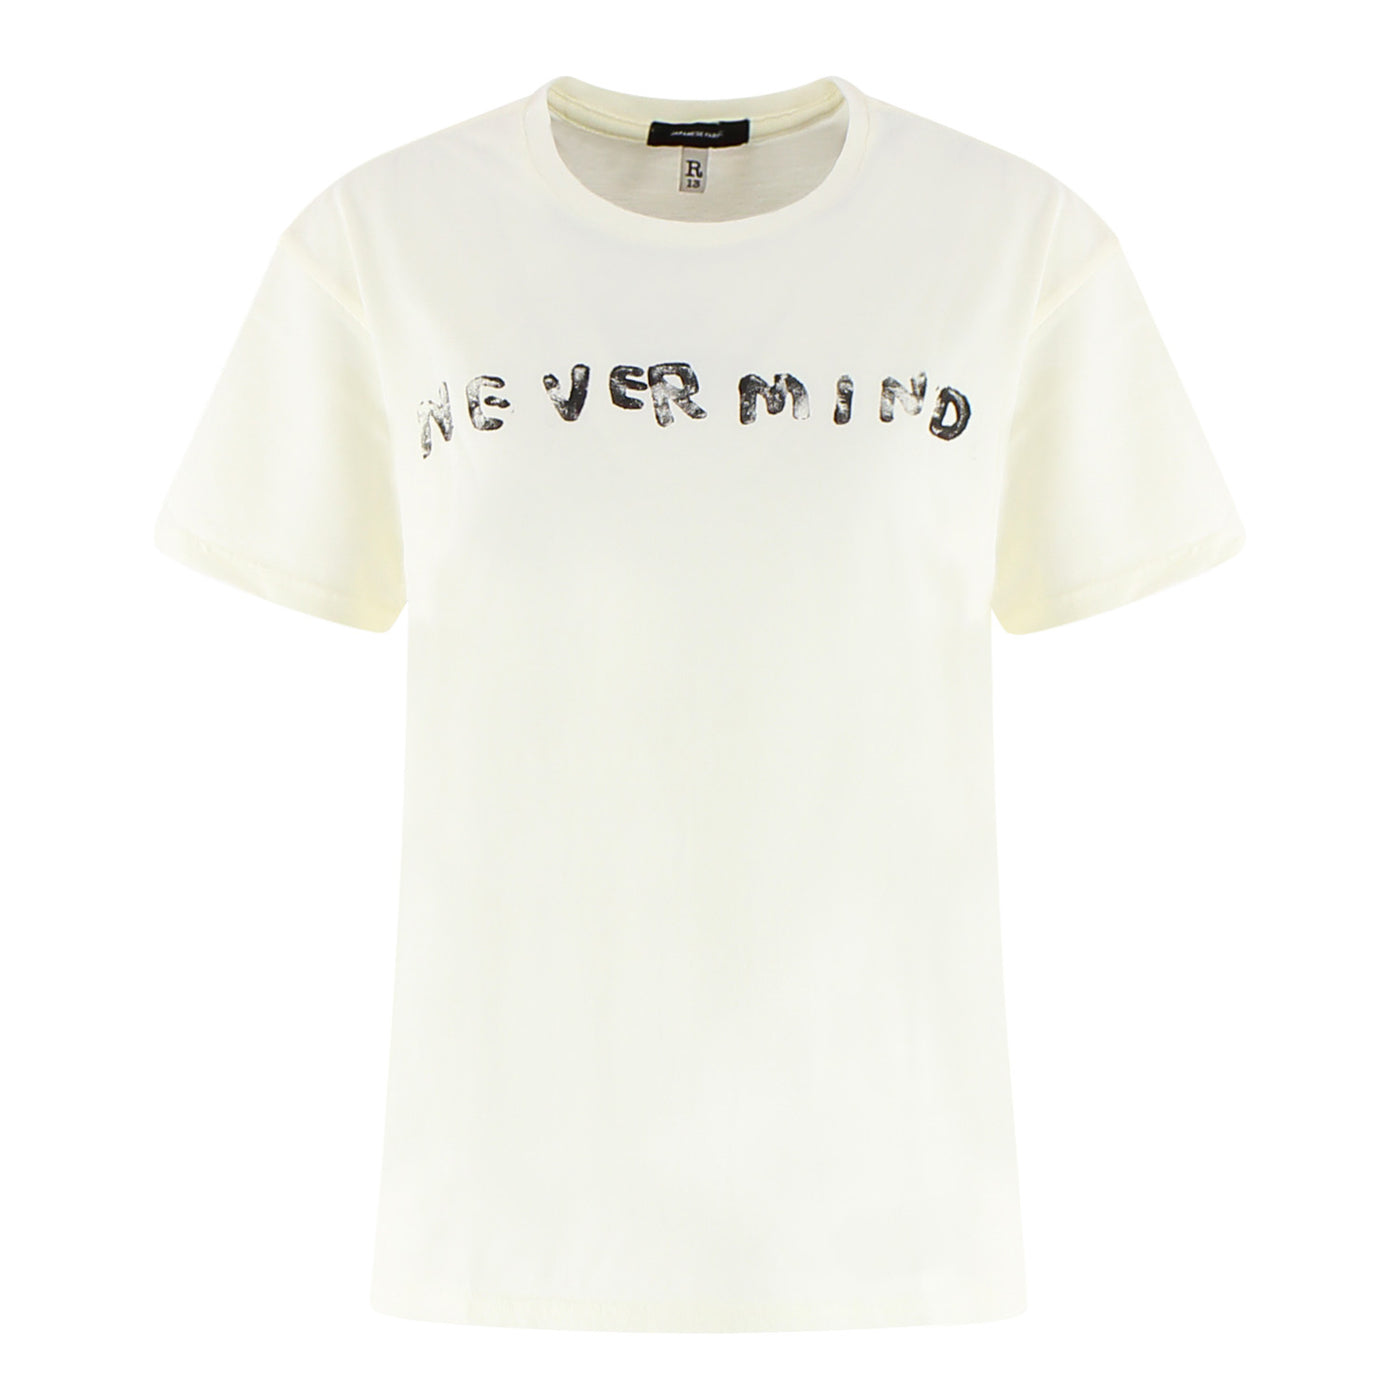 T-Shirt "Never Mind" aus Baumwolle